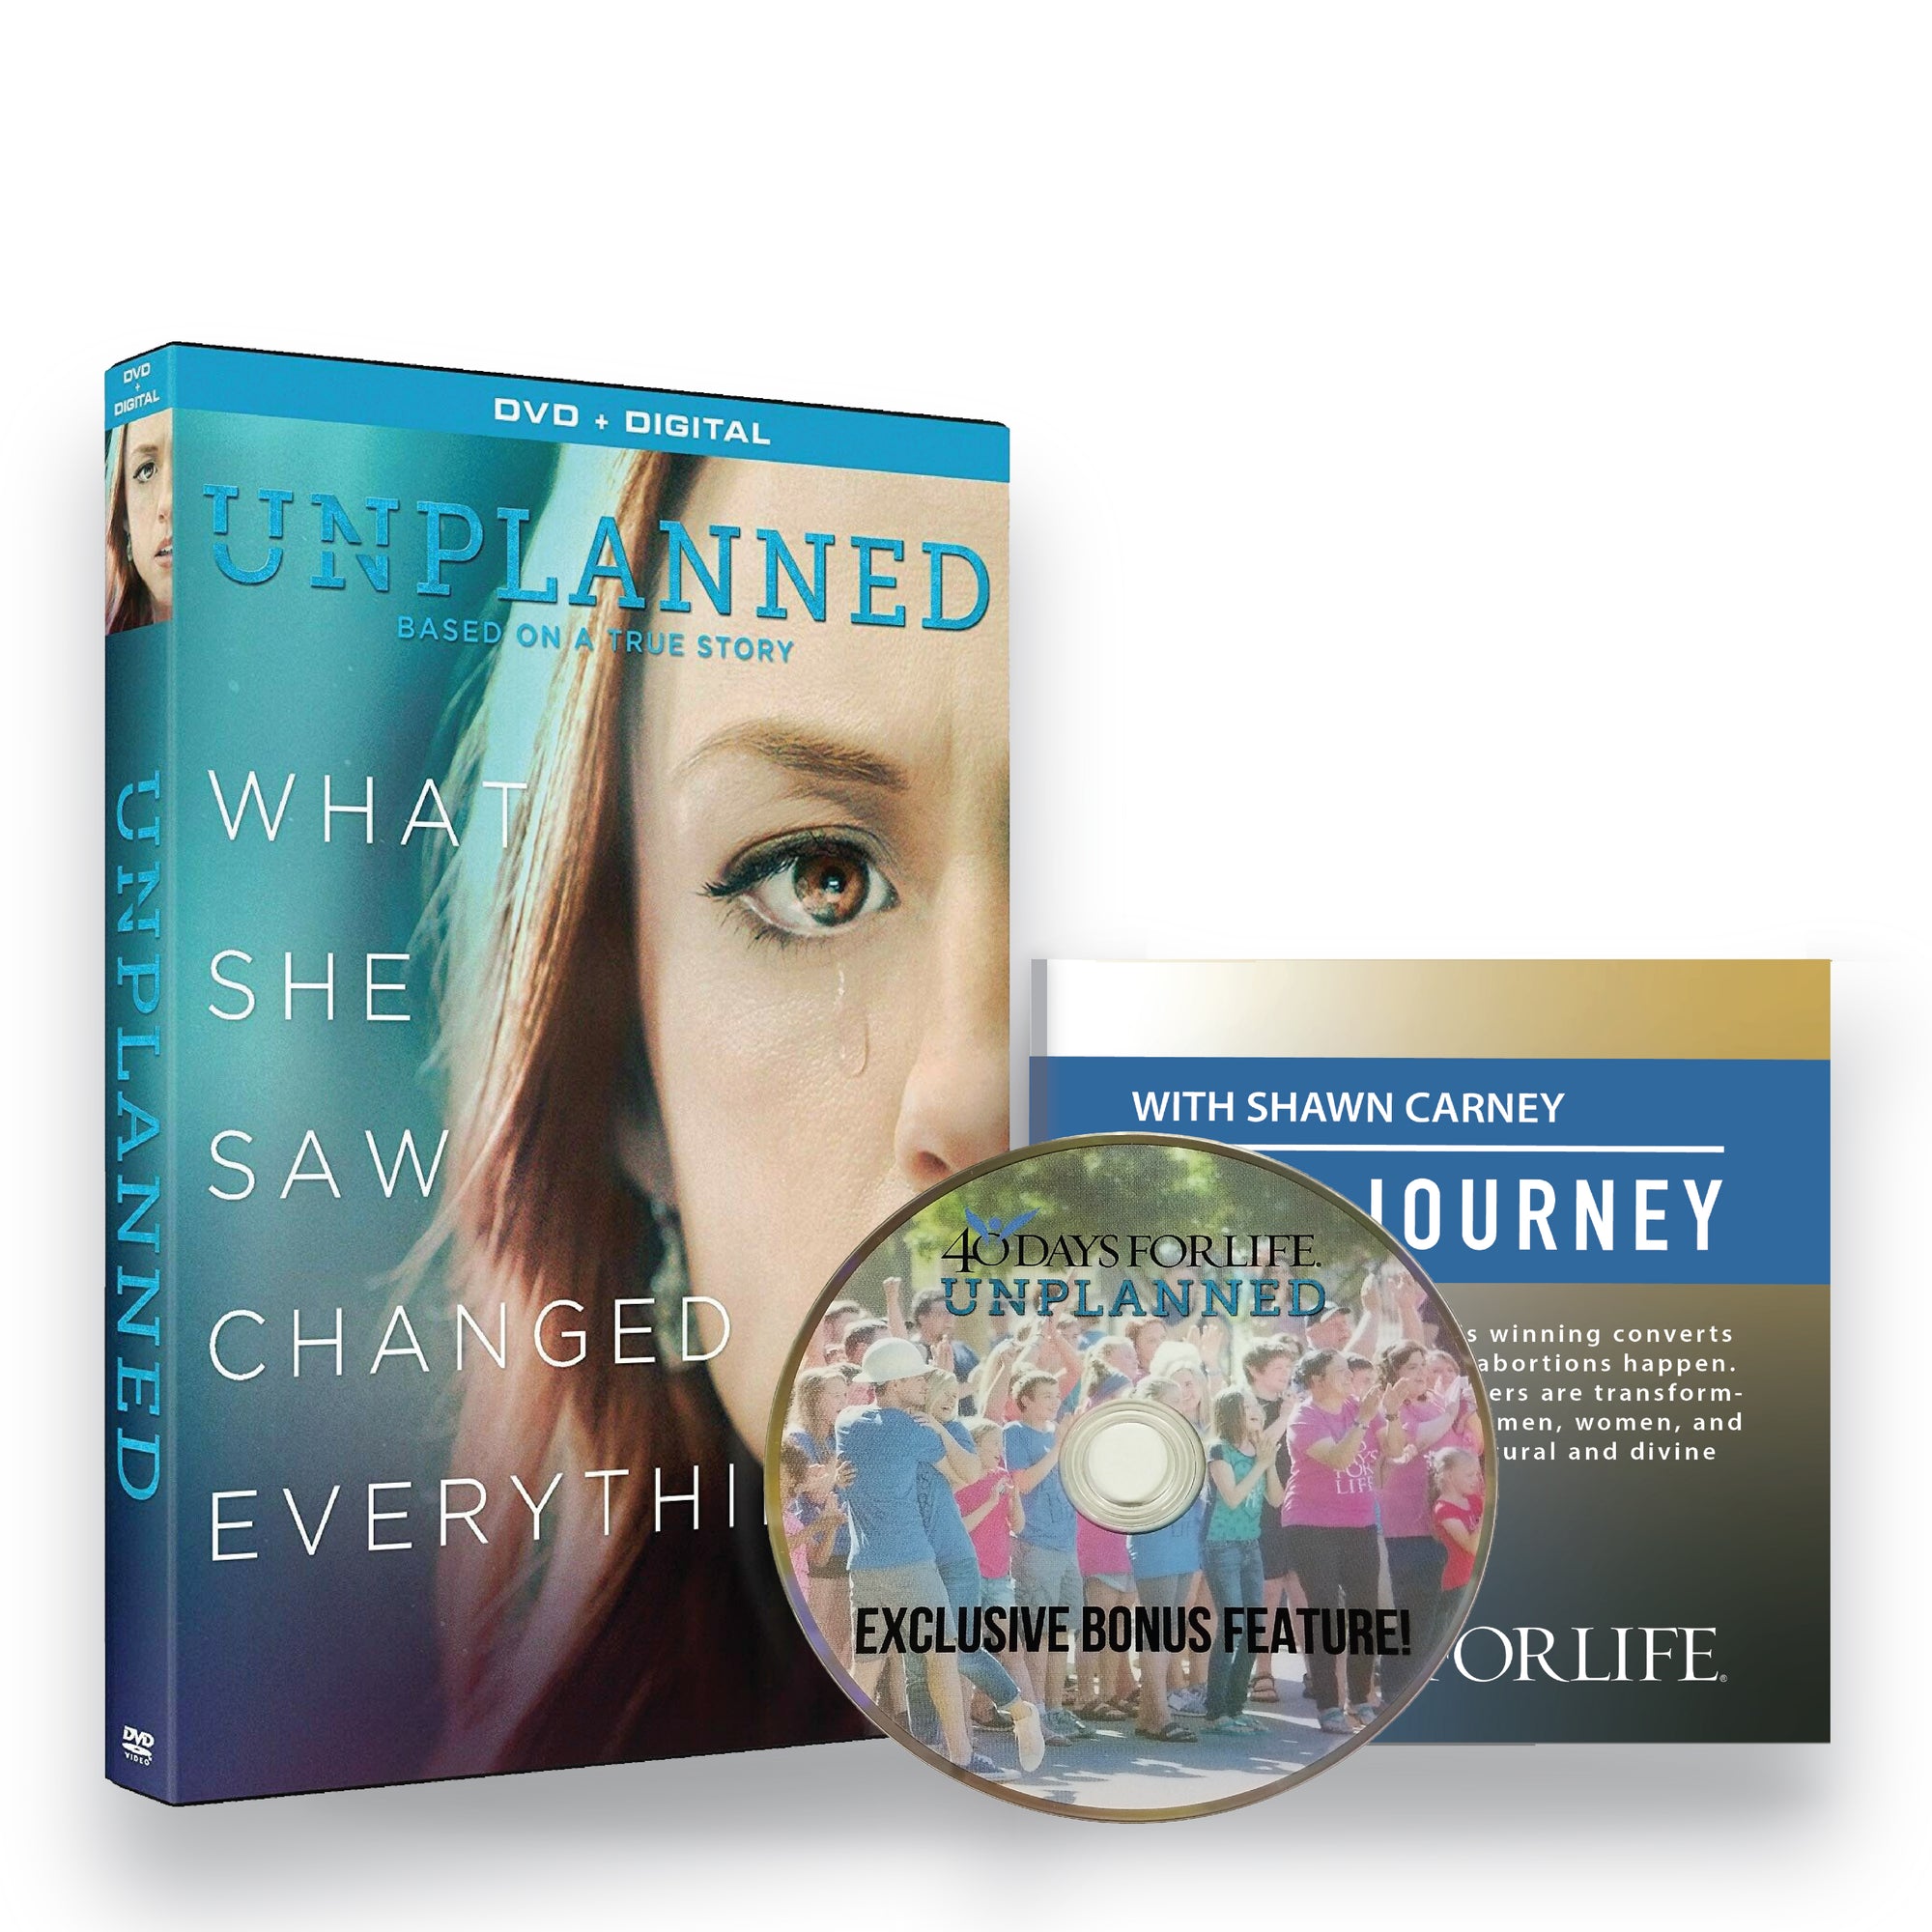 Unplanned / Bonus DVD / Life Journey (4595960774742)